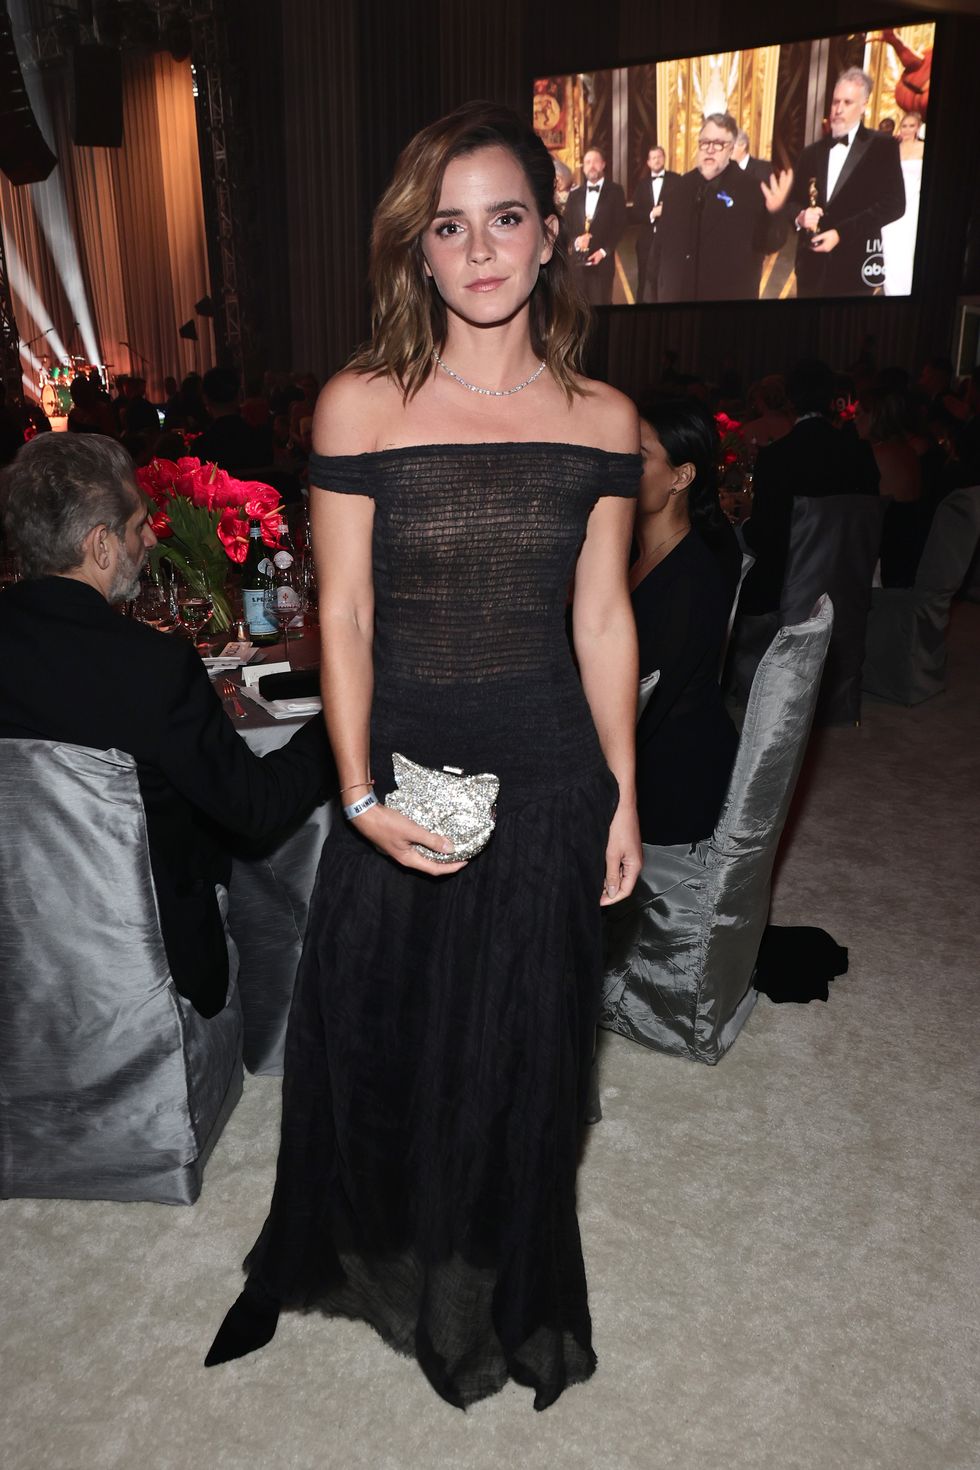 Emma Watson Wears Sheer Black Dress for Rare Oscars Party Appearance